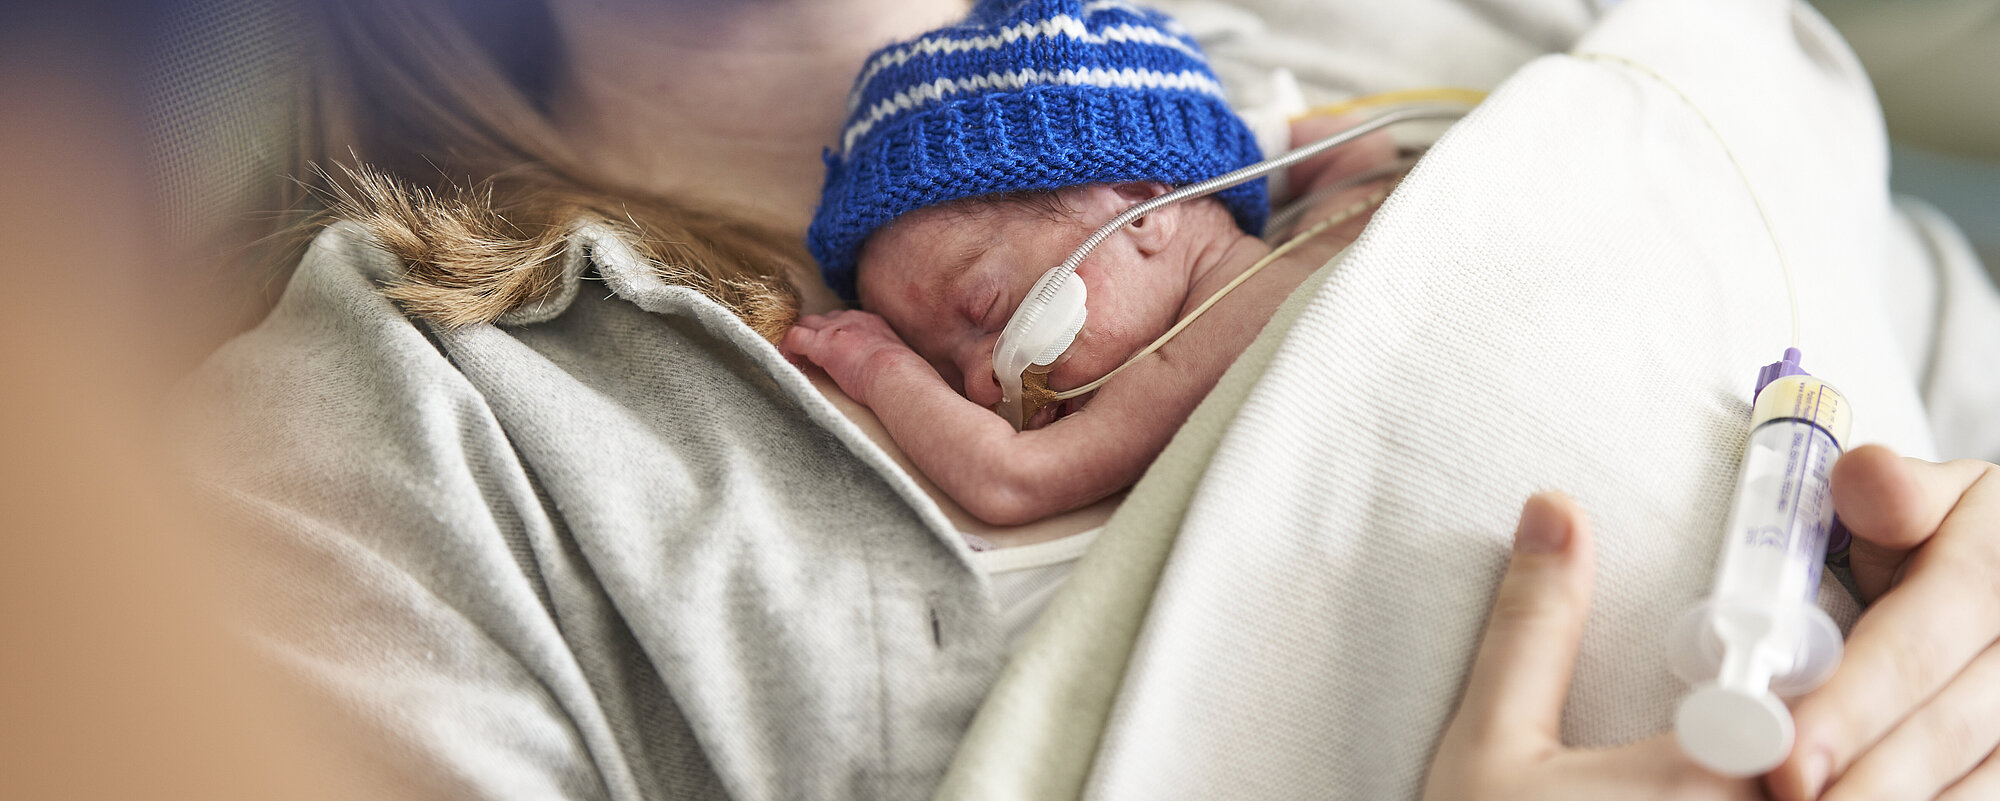 leoni 4 ventilation premature infants children with mother